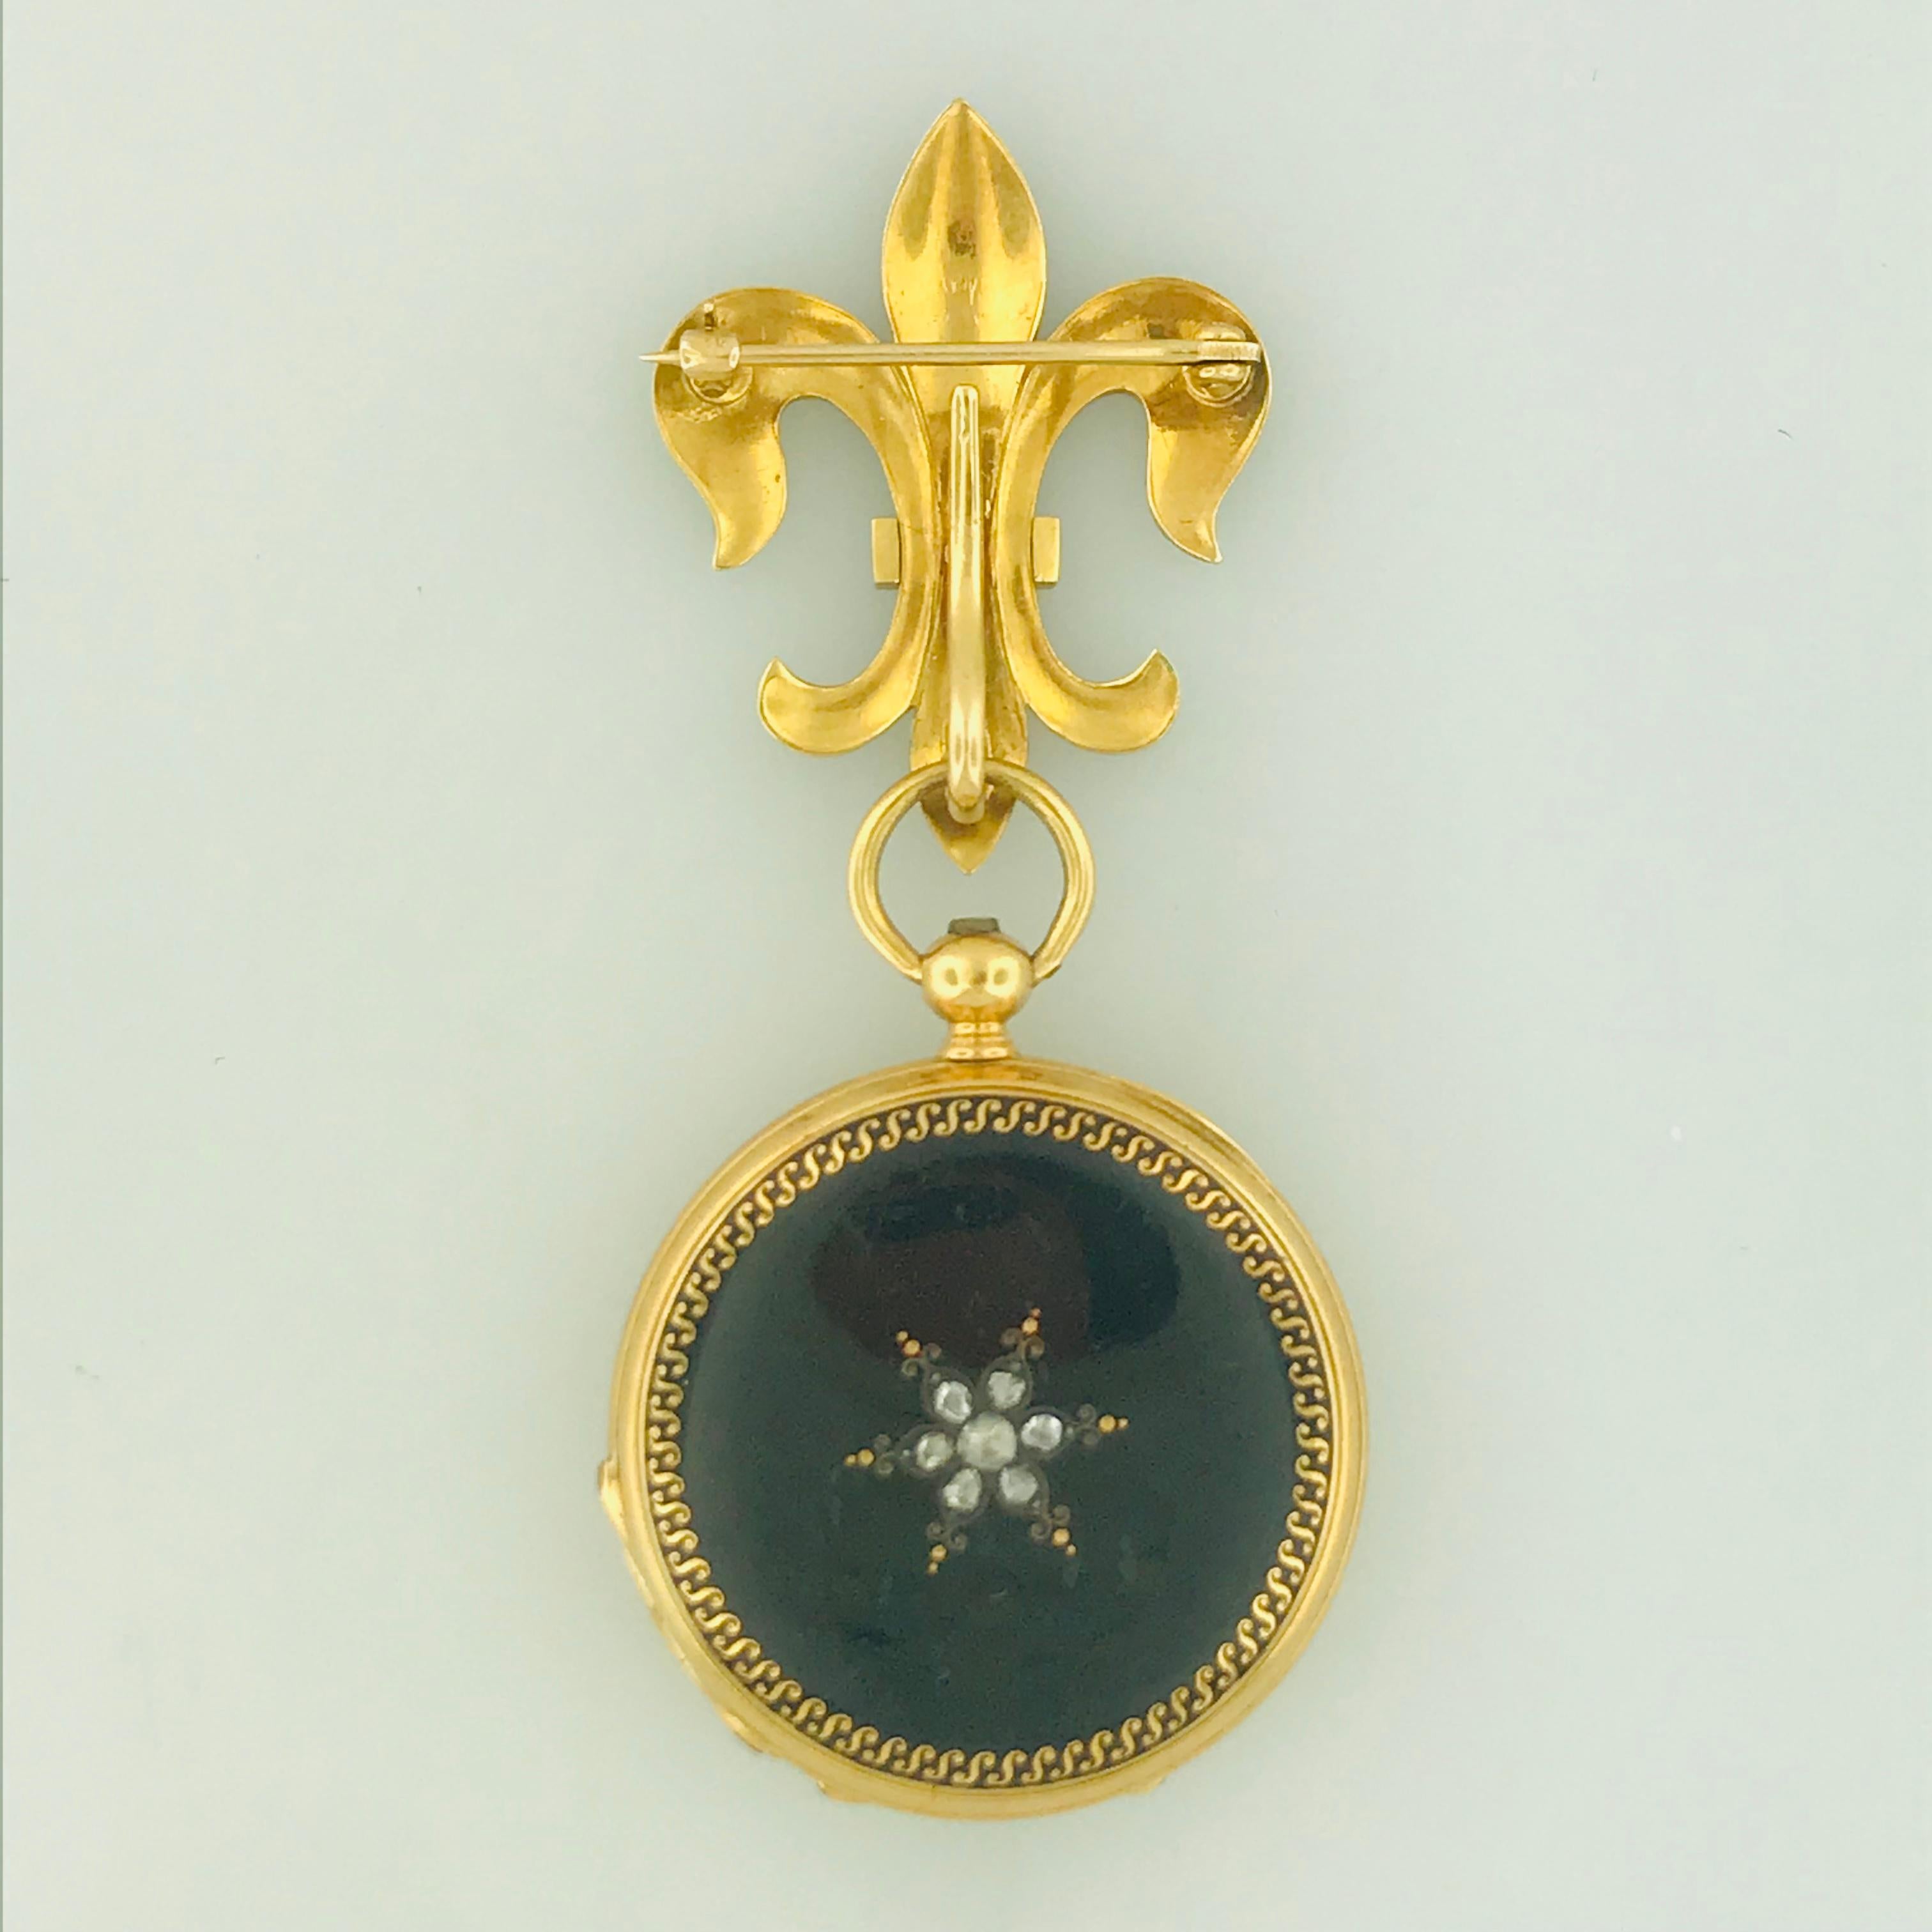 This extremely unique French watch pin has an 18 karat yellow gold, black enamel diamond fluer de lis pin and a matching black enamel diamond 